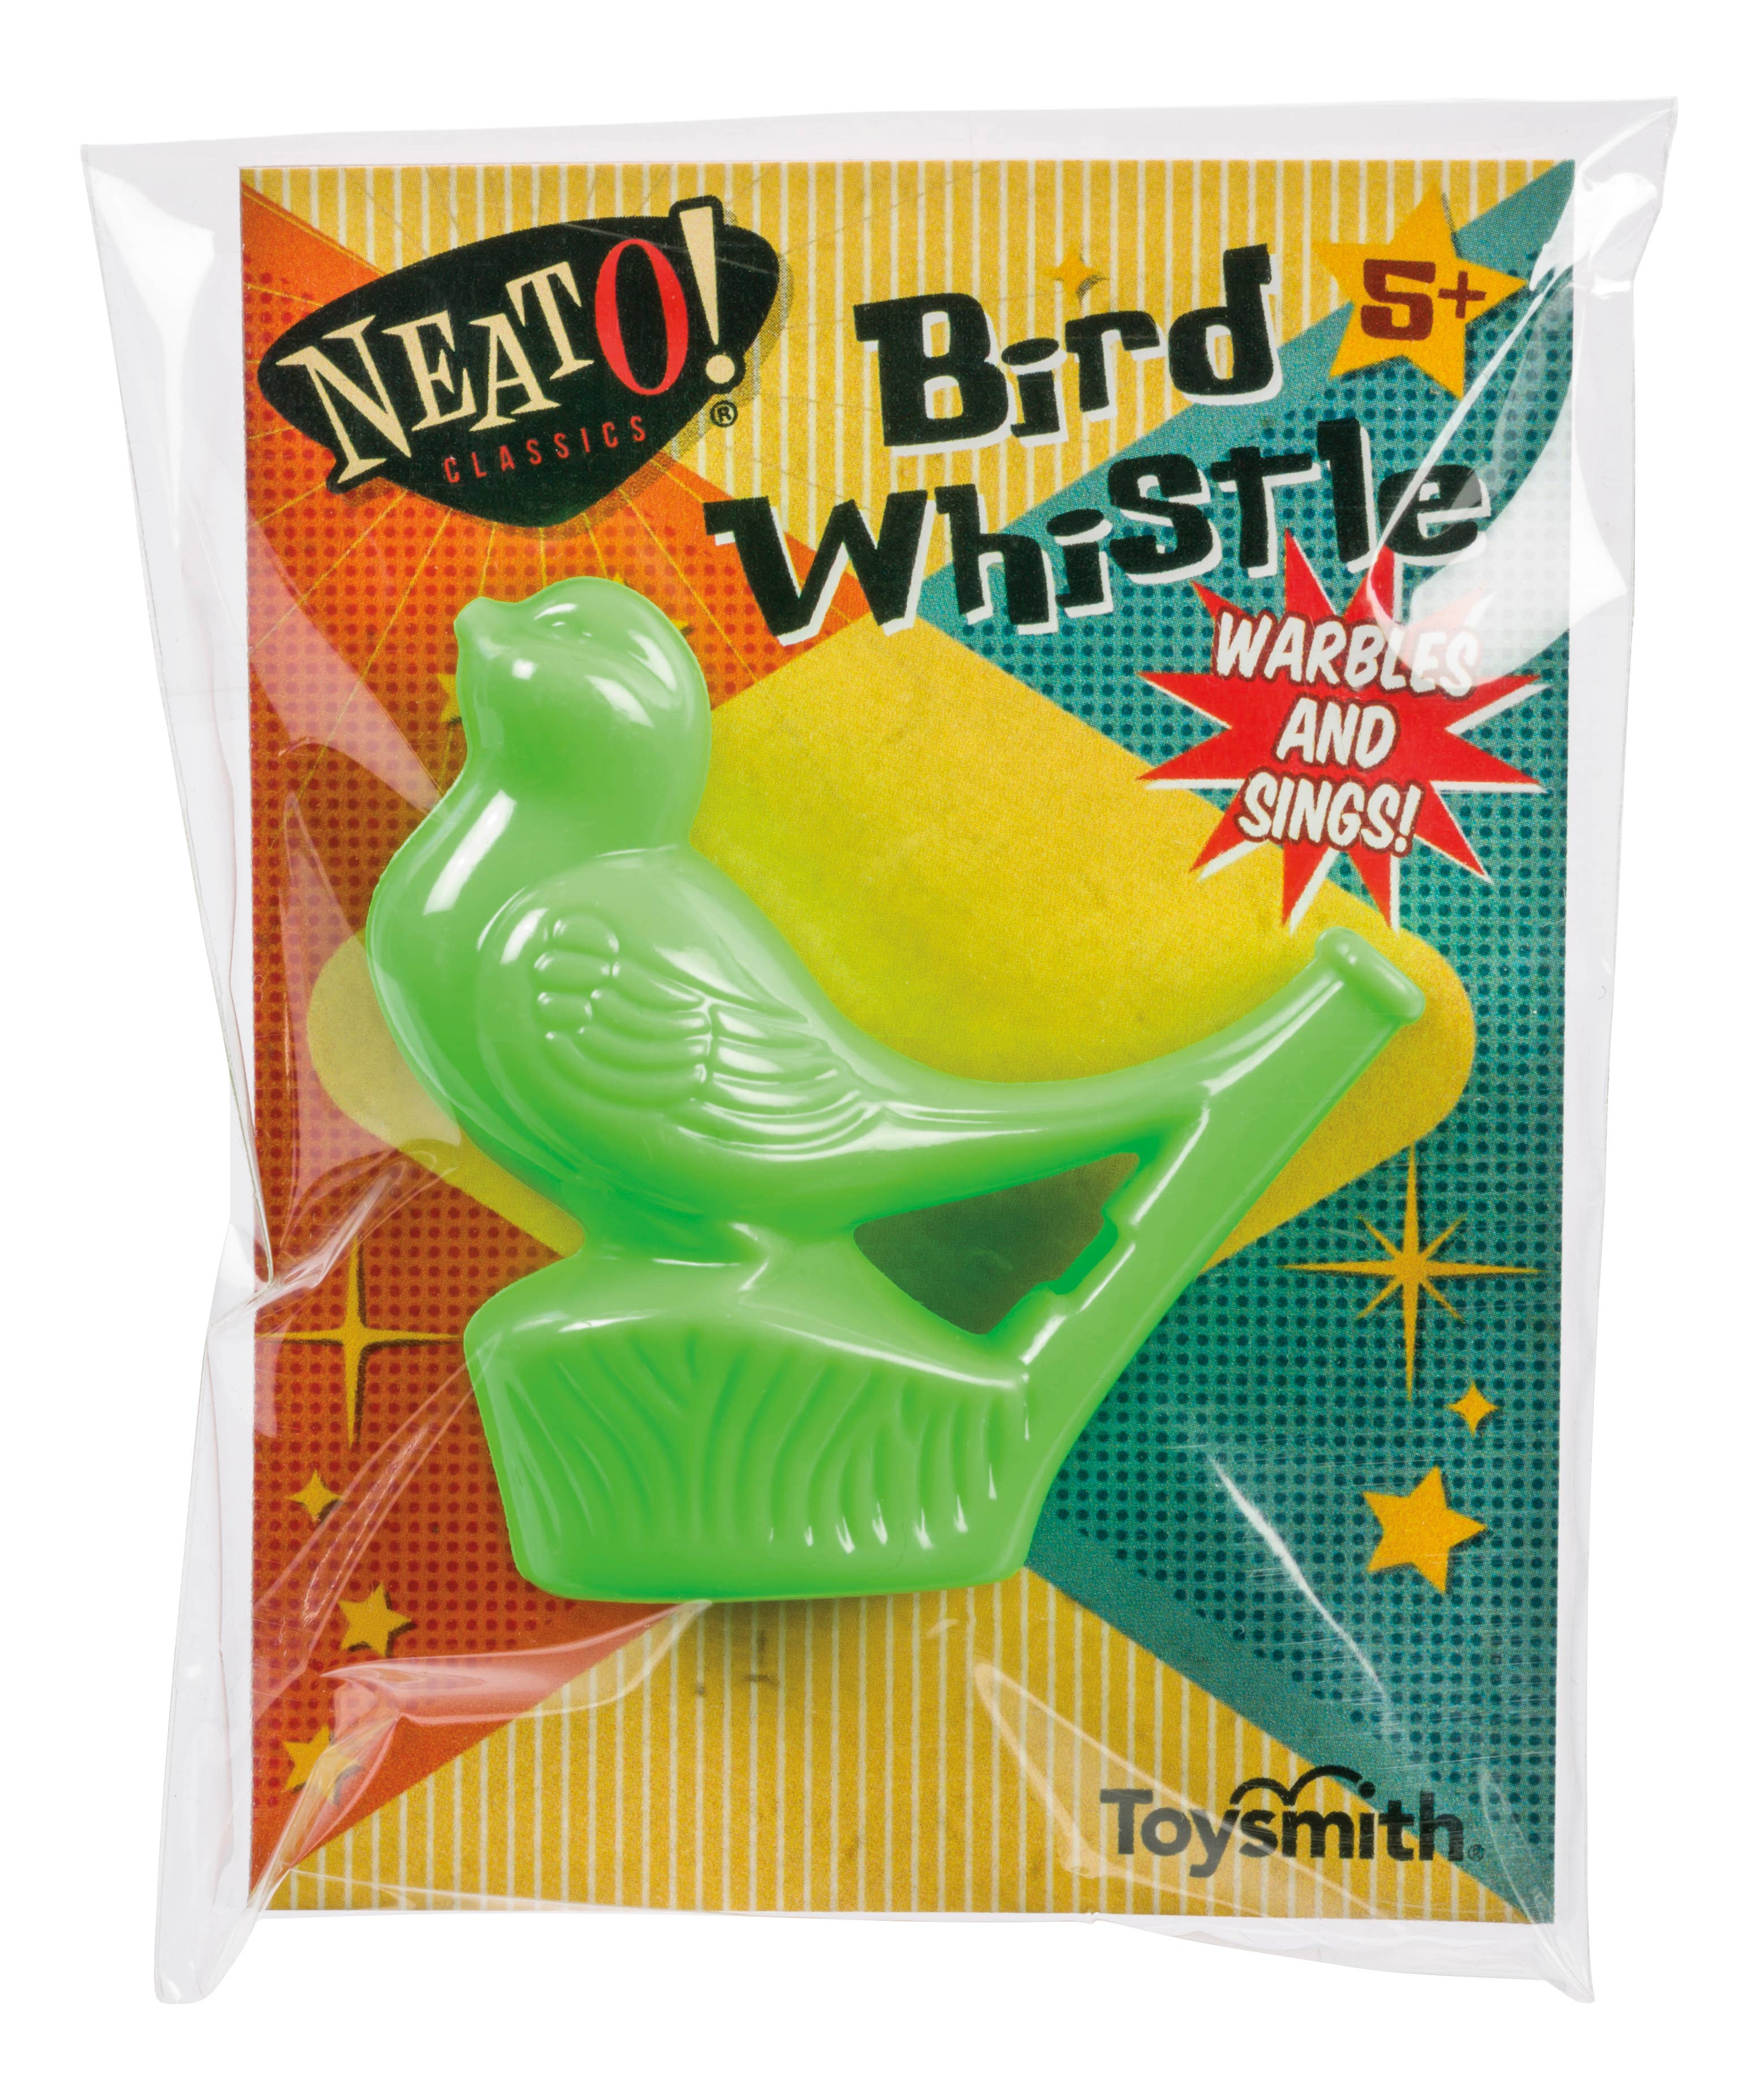 Neato! Bird Whistle